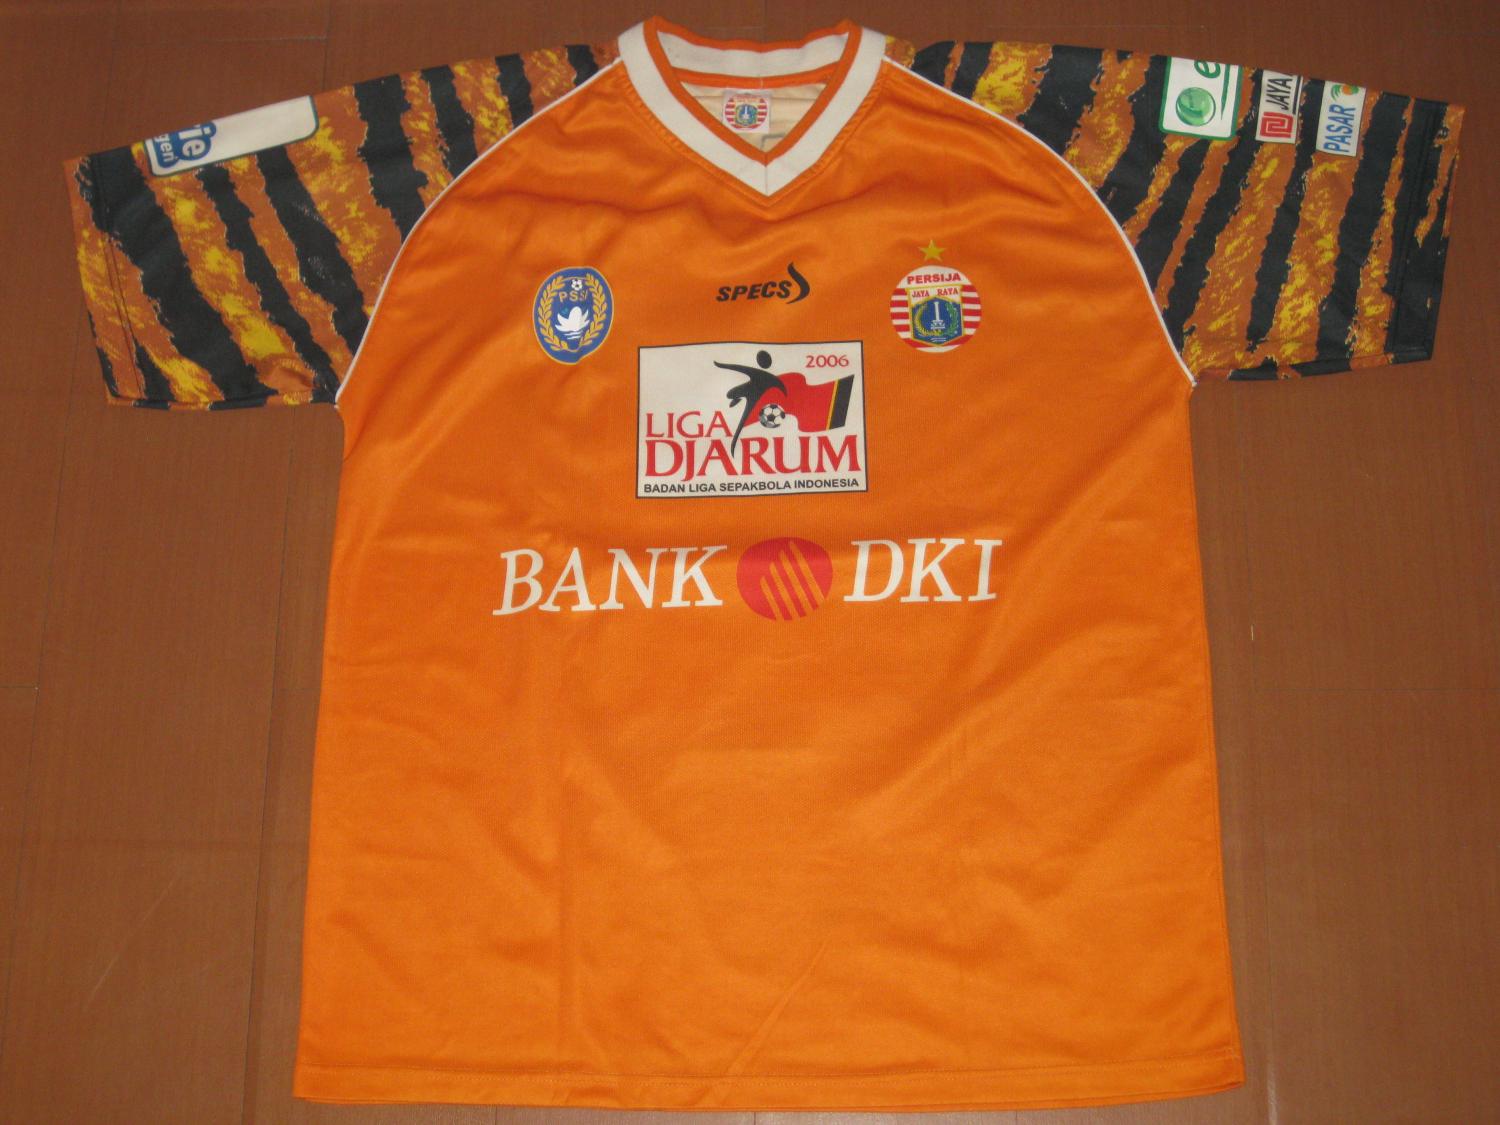 Persija Jakarta Home football shirt 2006 - 2007. Sponsored by Bank DKI